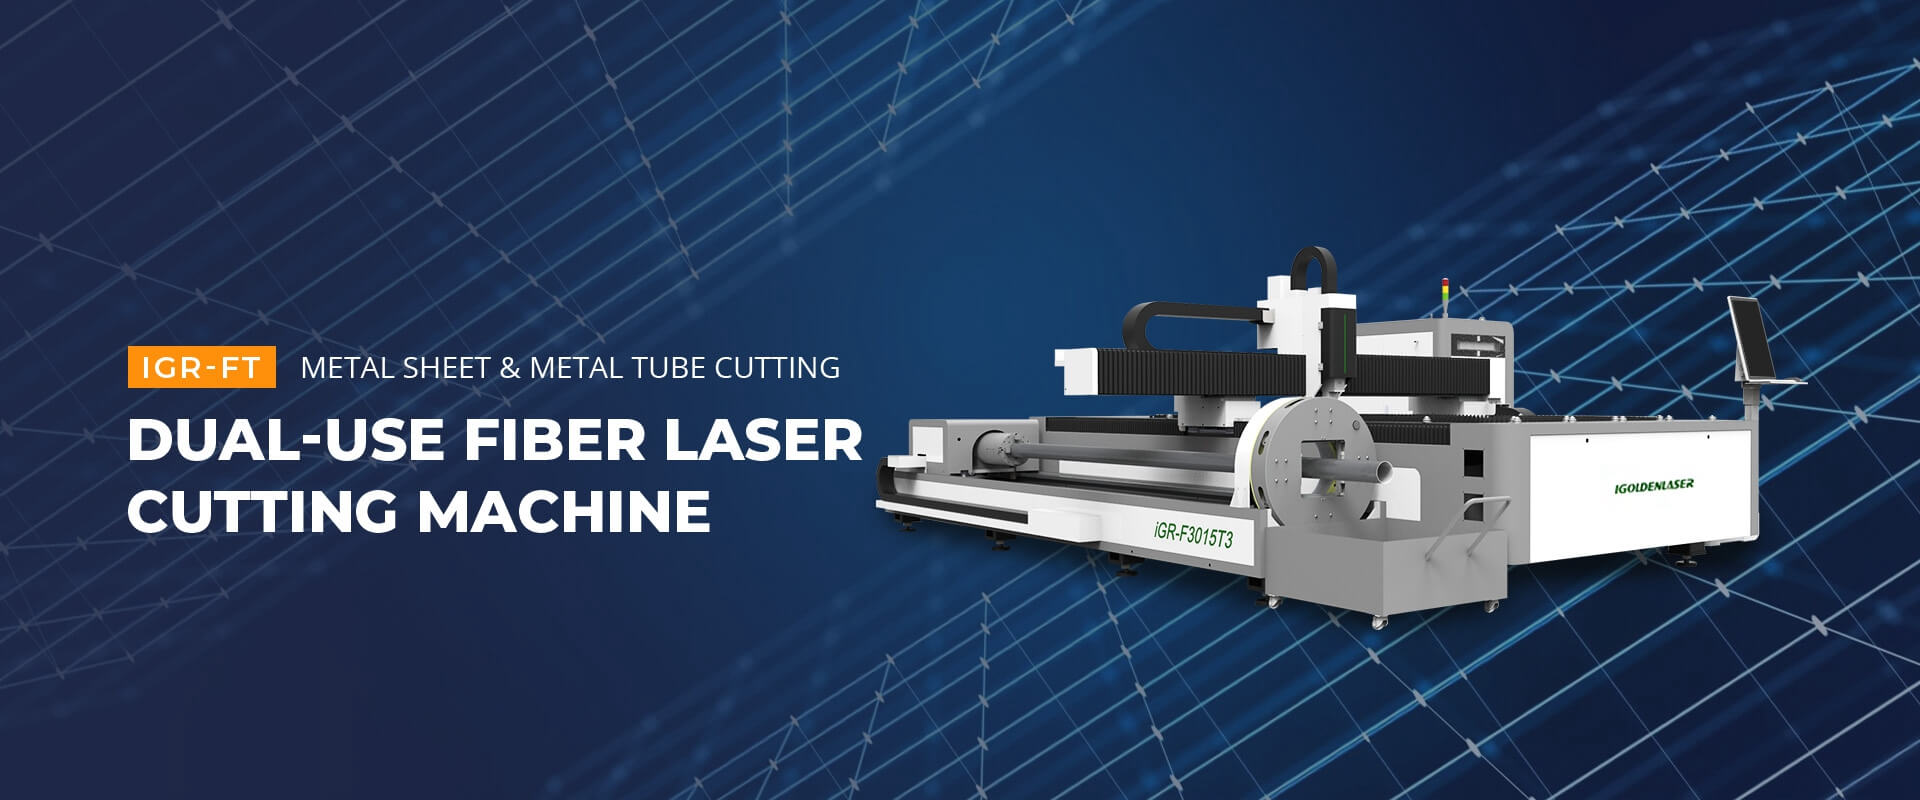 Sheet and Tube Laser Cutting Machine